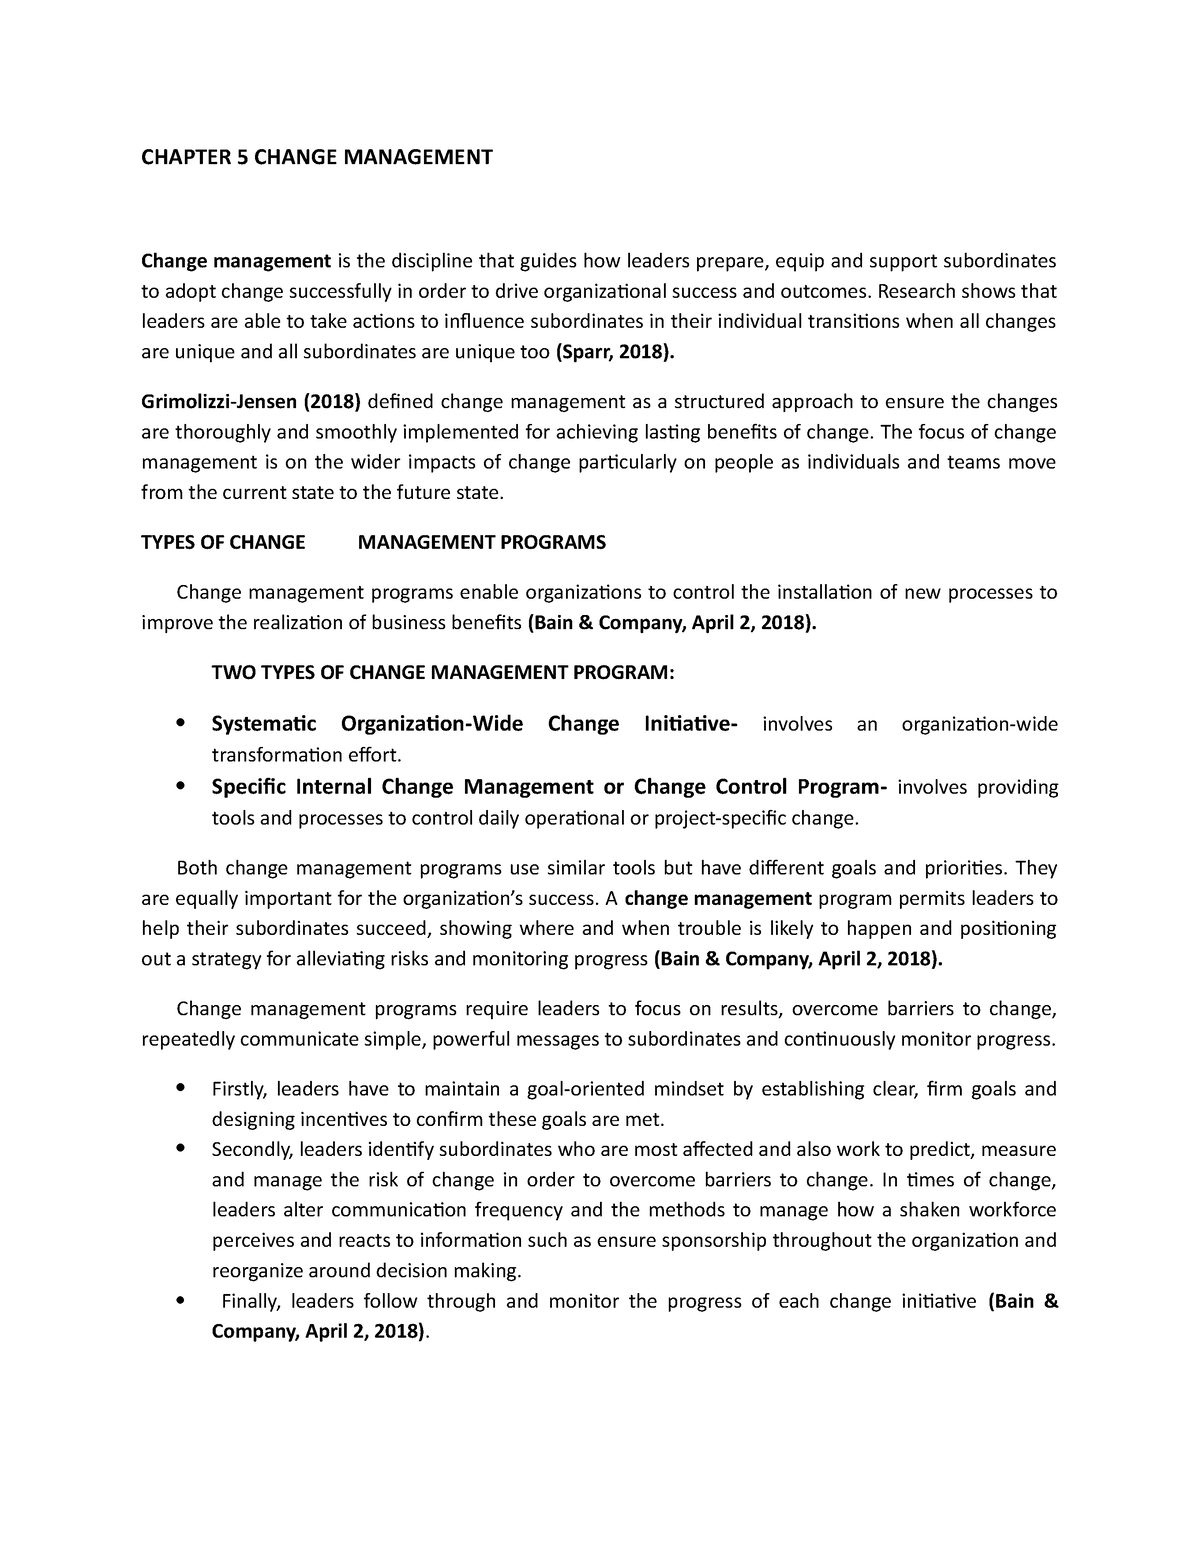 dissertation change management pdf